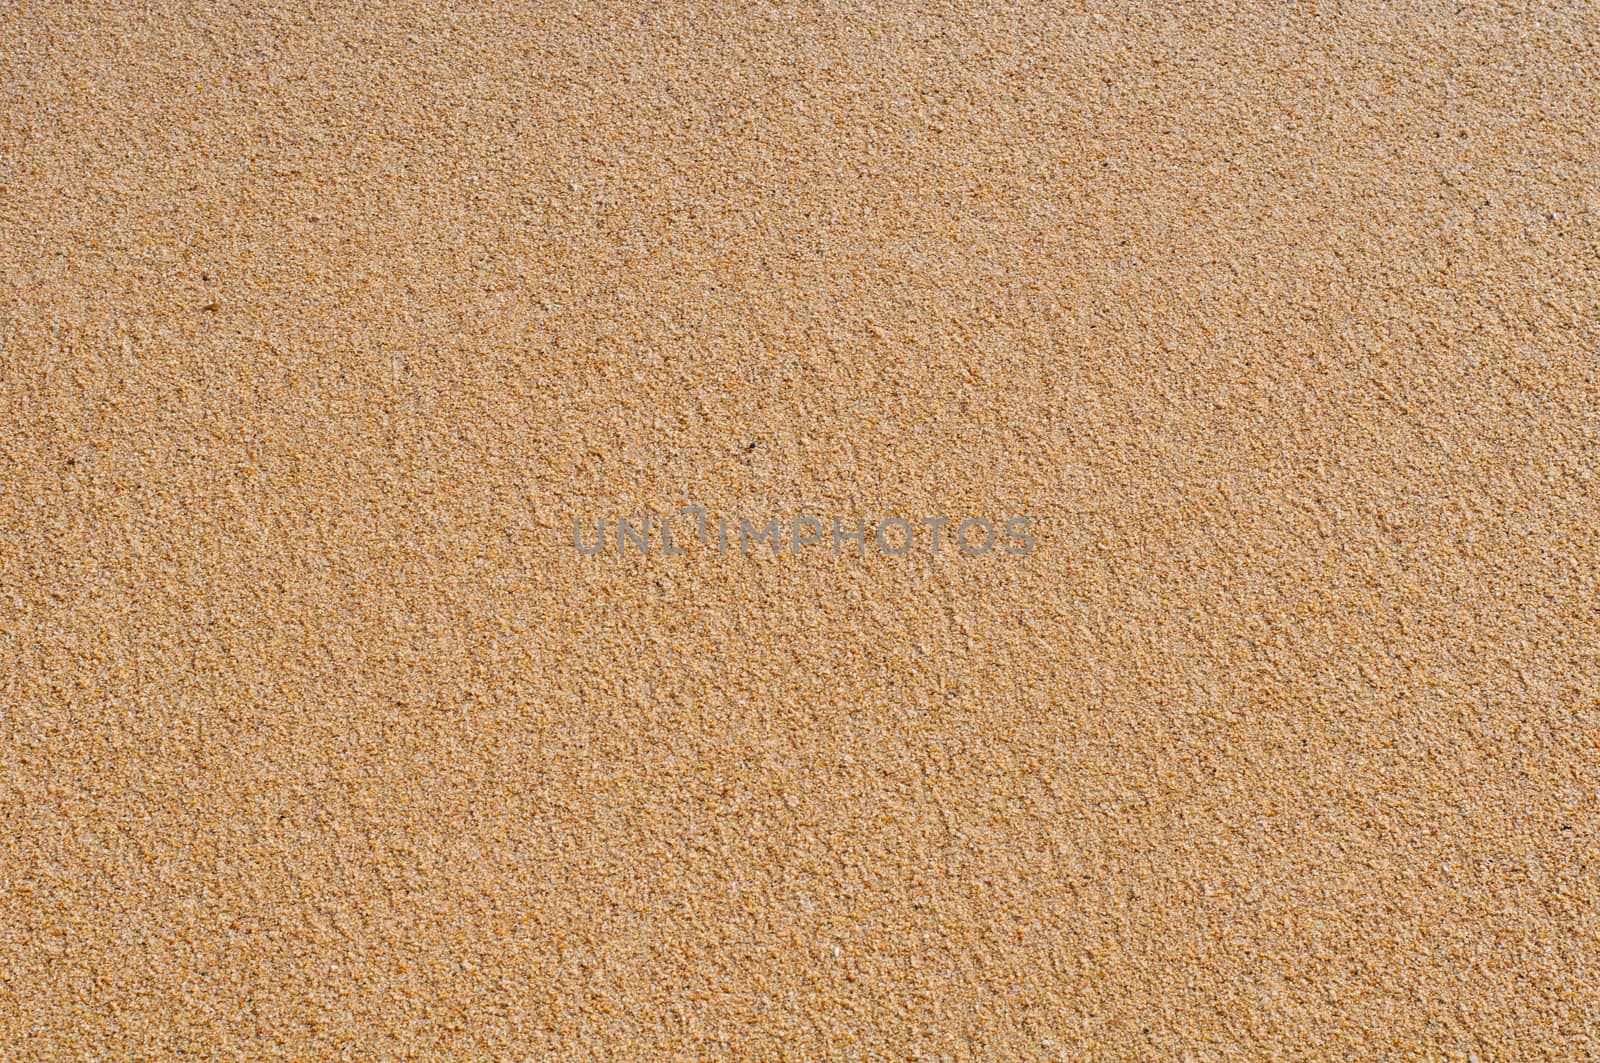 Coarse sand background texture of coarse sand grains.